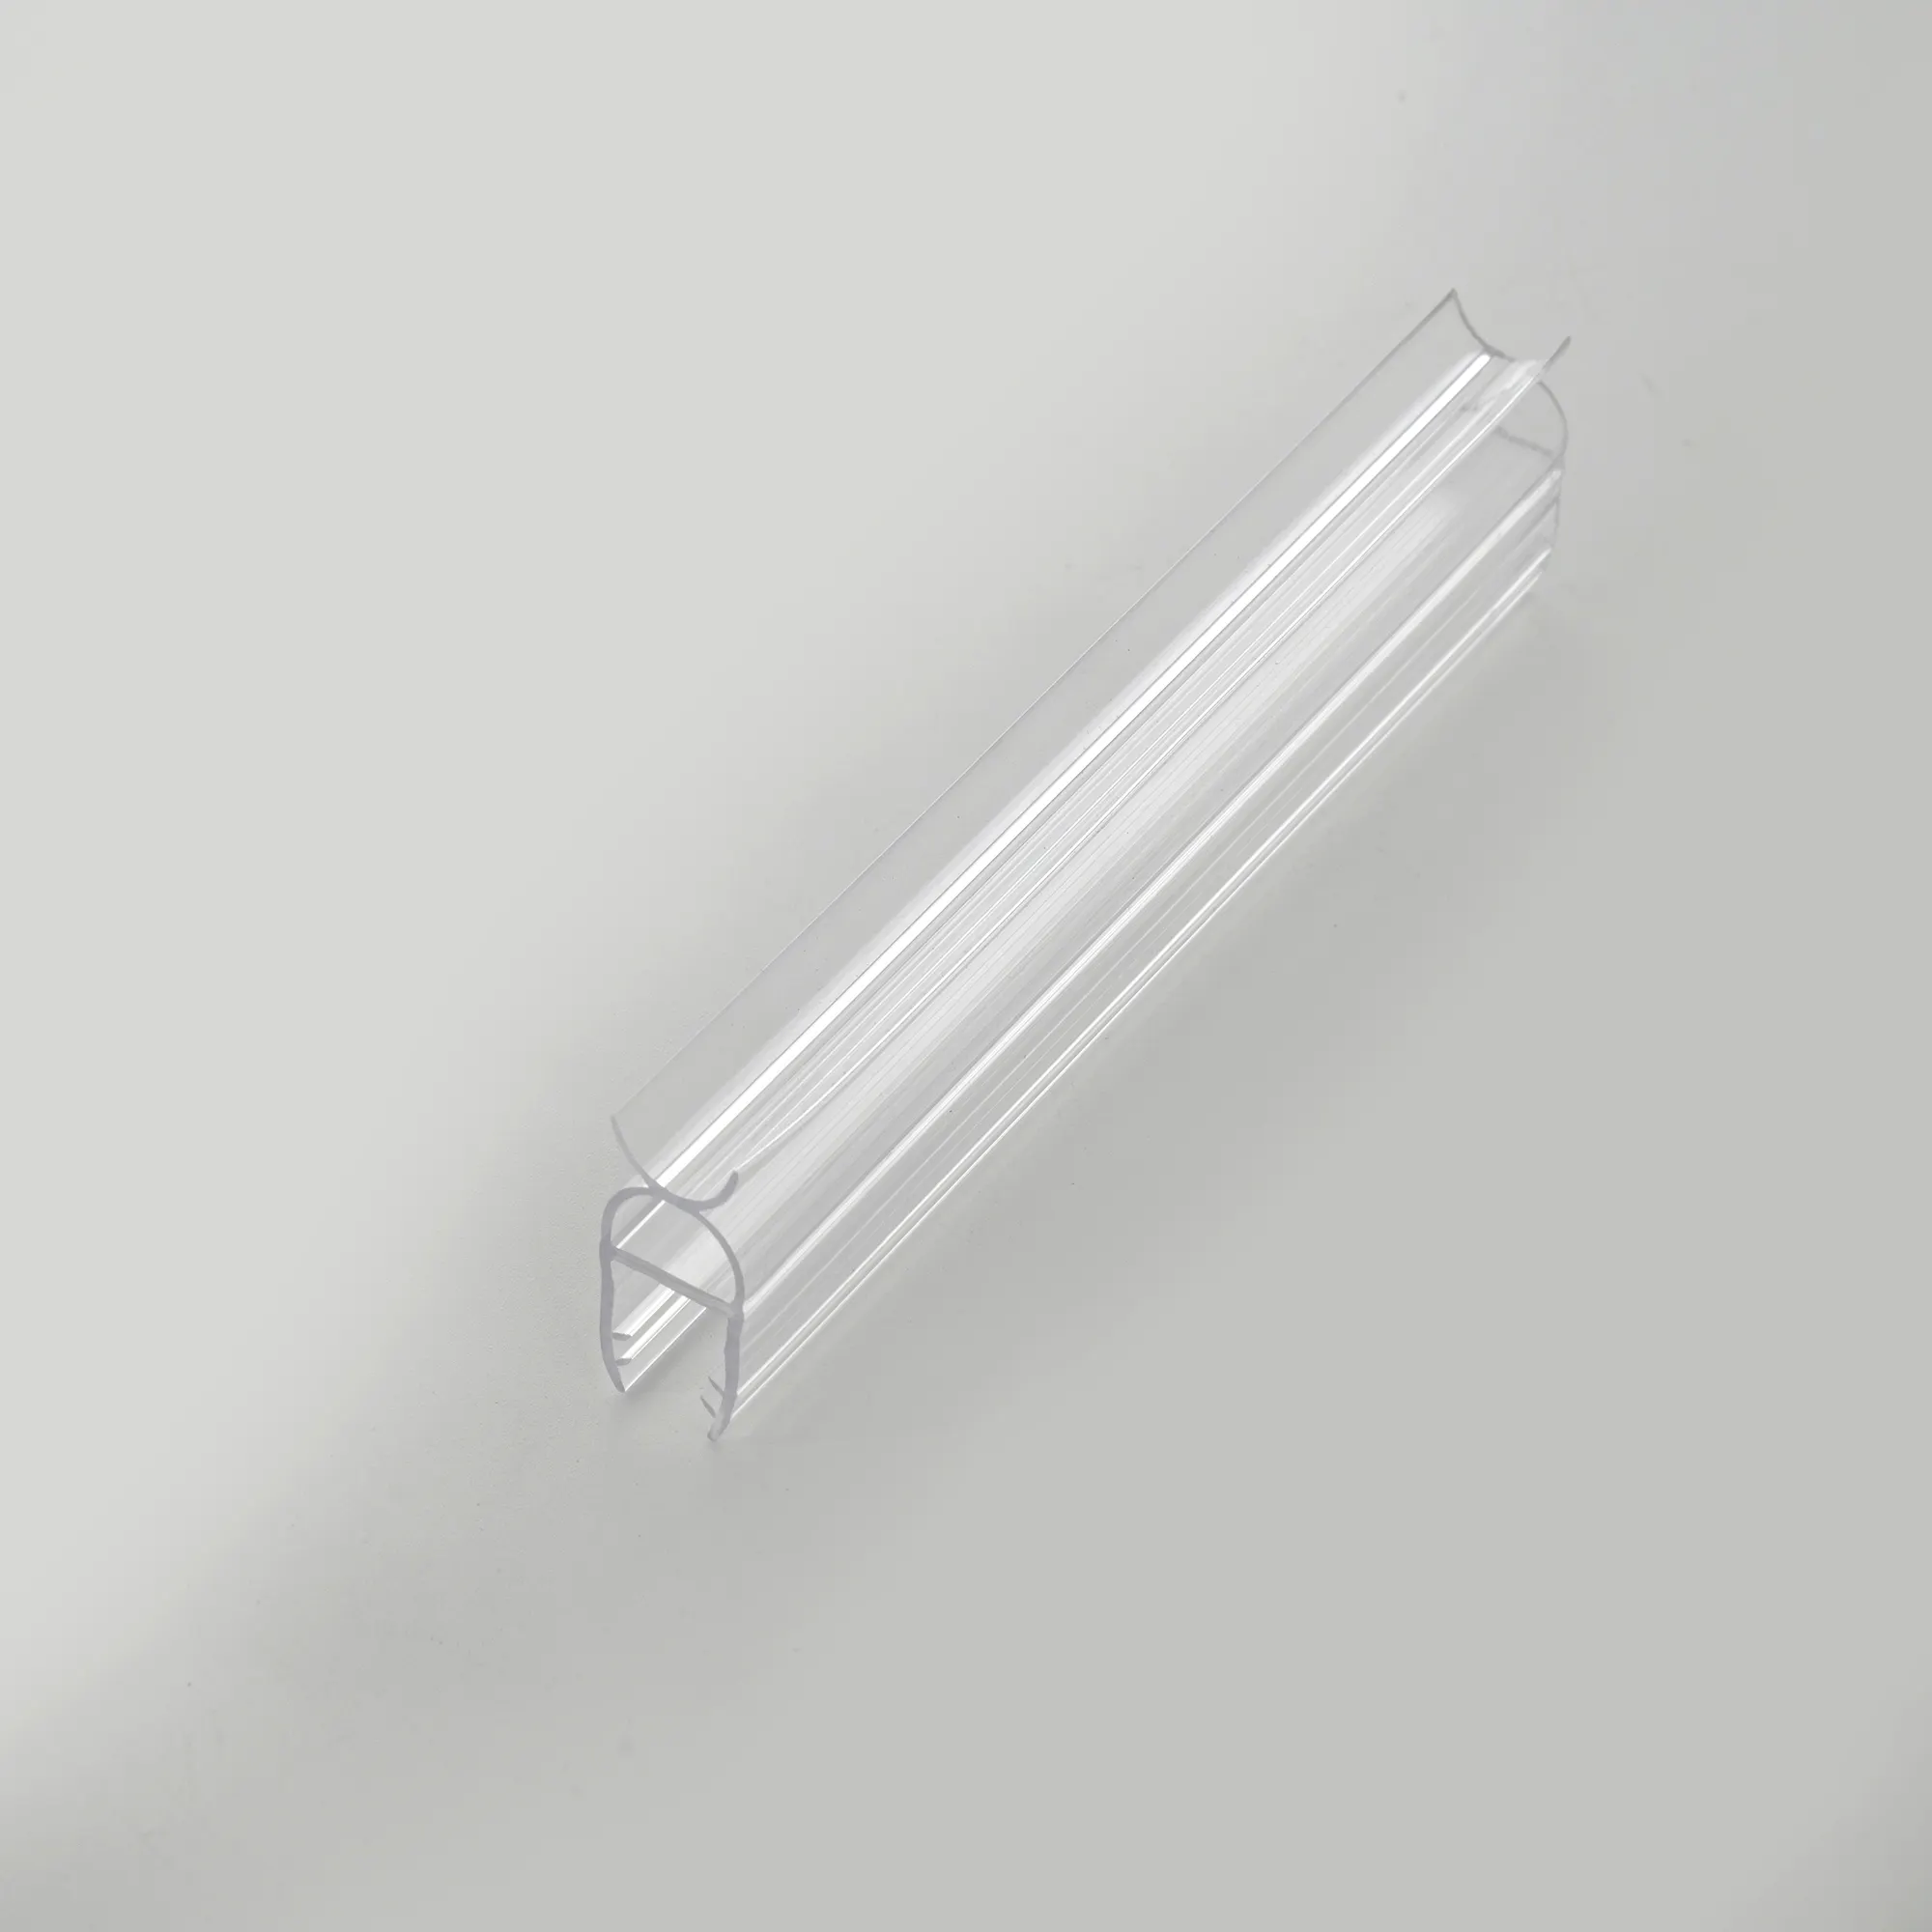 Waterproof customized bathroom epdm seal strip PVC plastic shower glass door rubber sealing strips